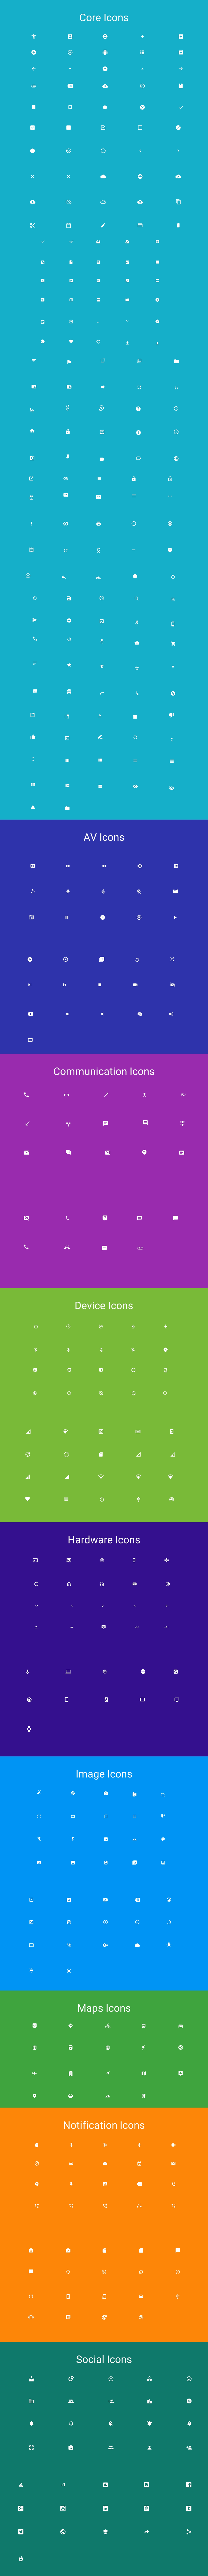 material design icons